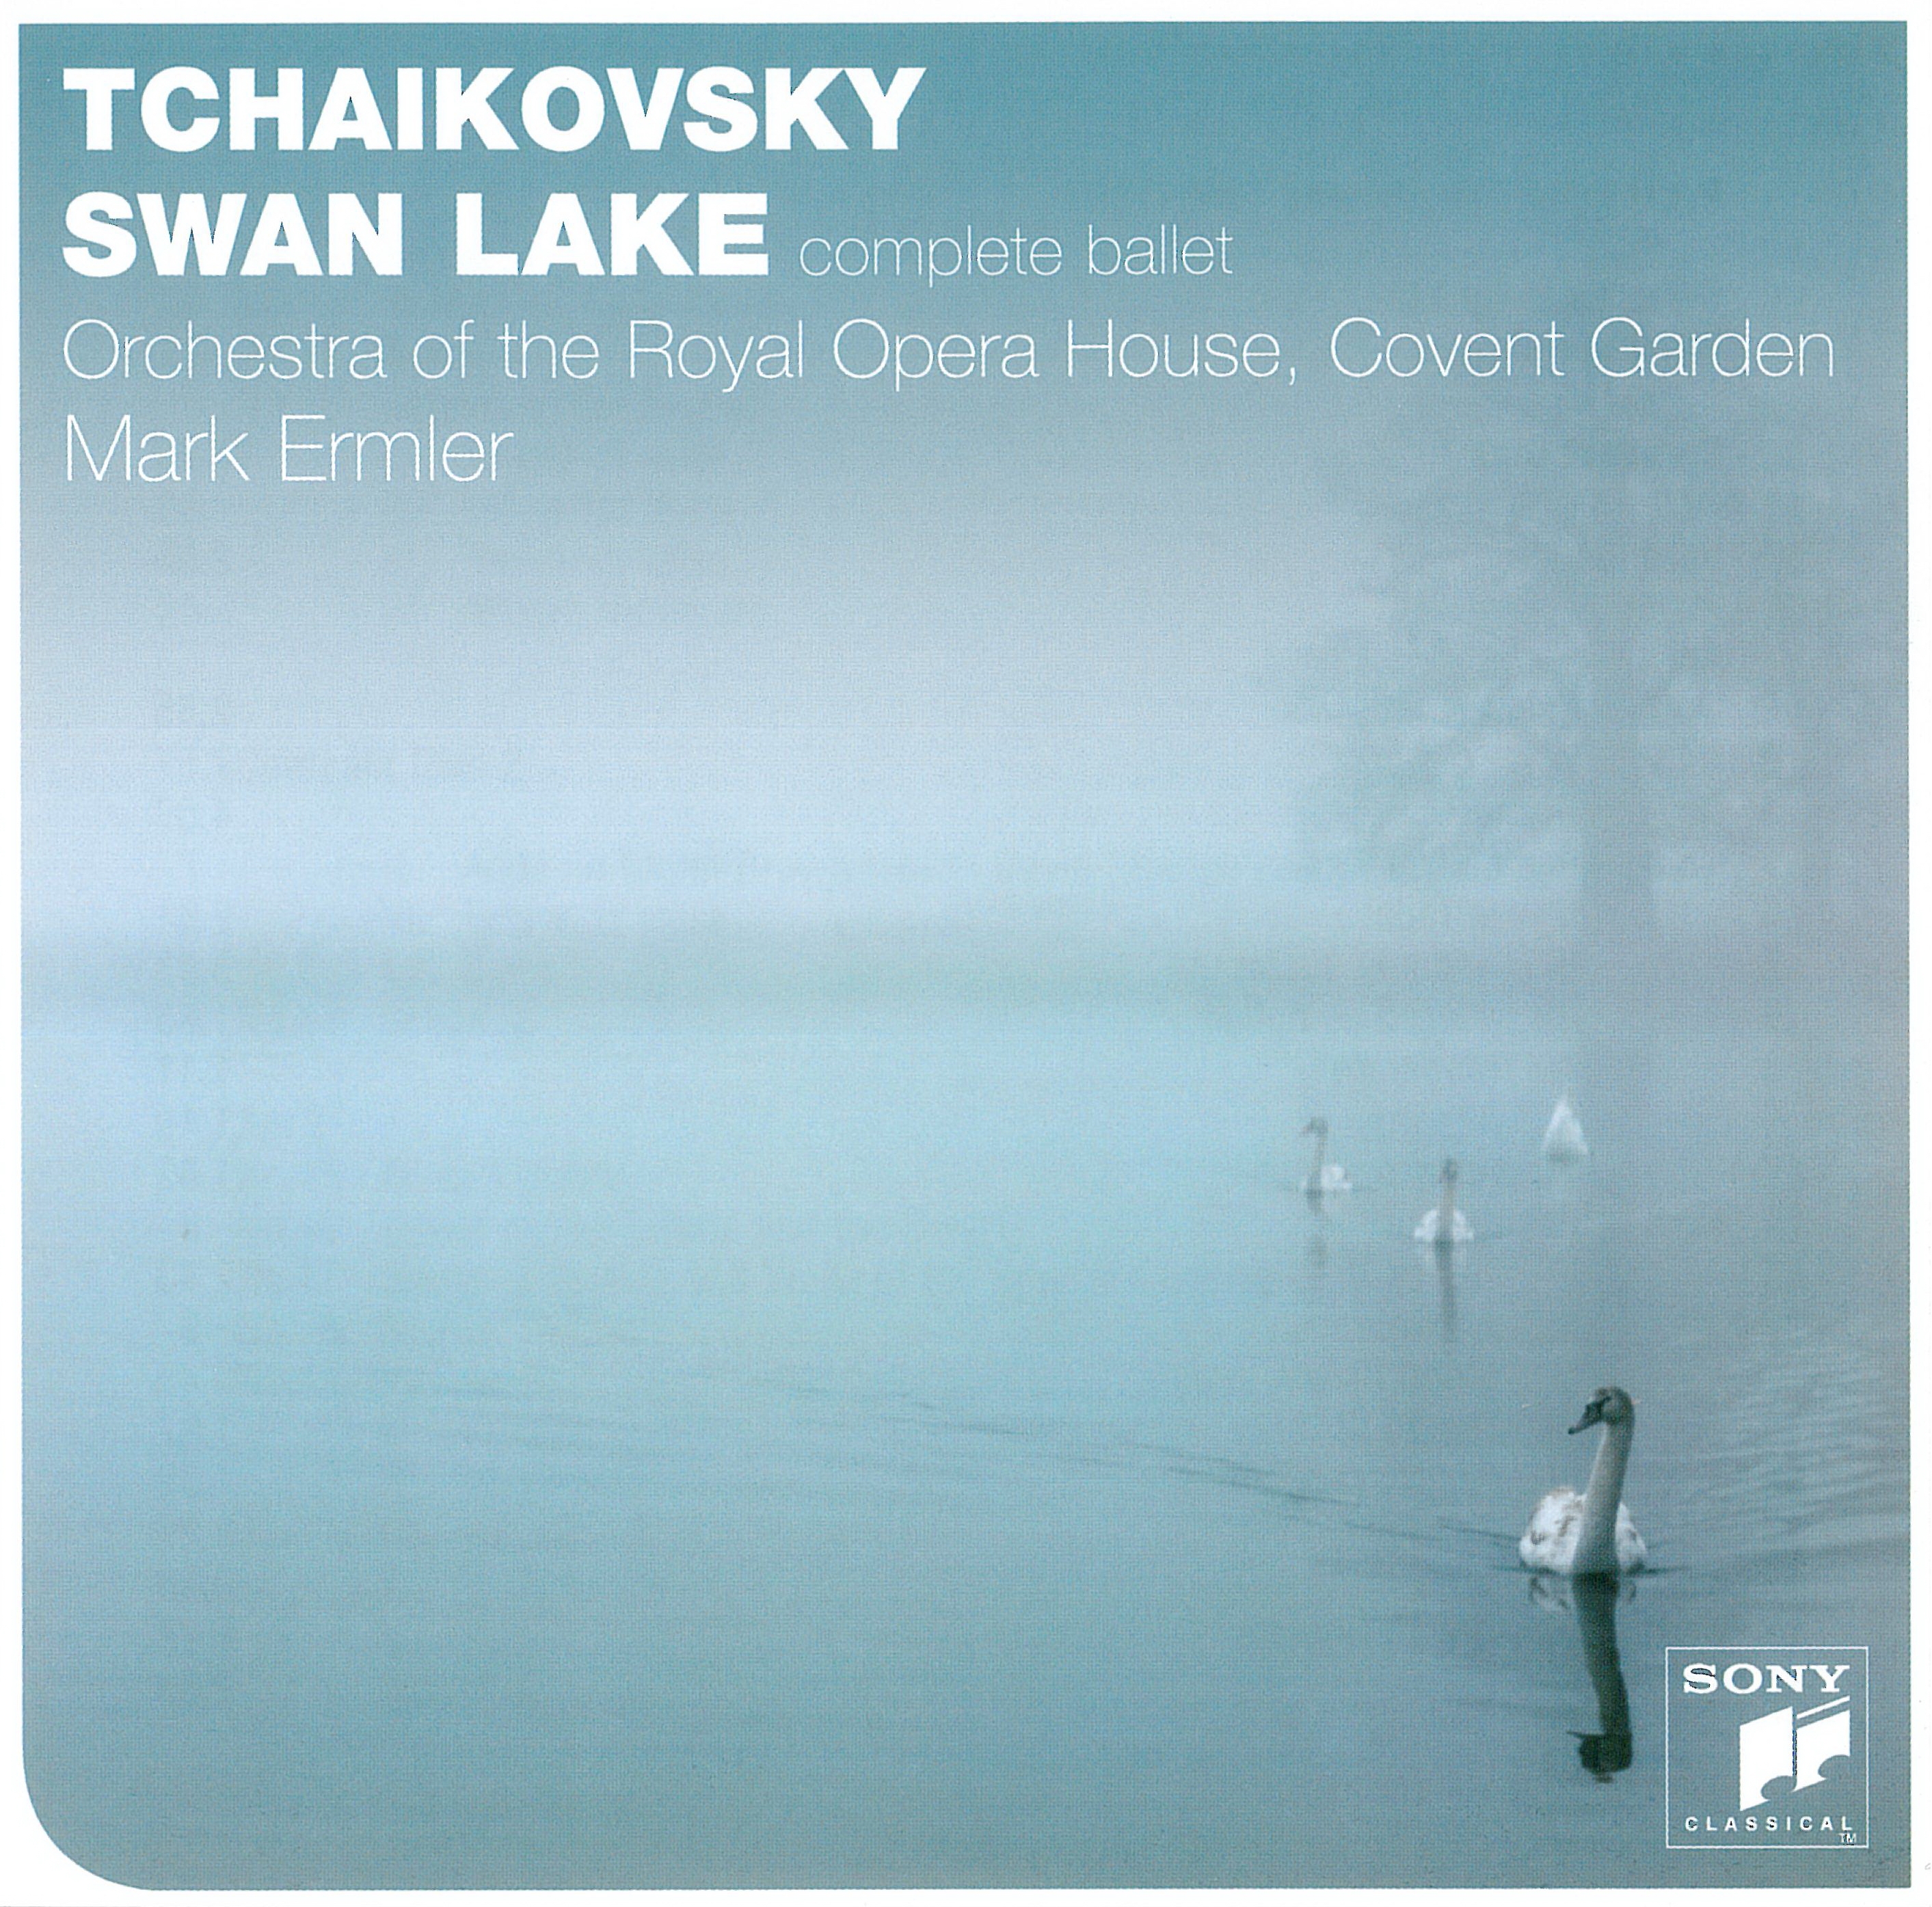 Лебединое озеро mp3. Orchestra of the Royal Opera House, Covent Garden Swan Lake. Swan Lake CD. Swan Lake 1991.